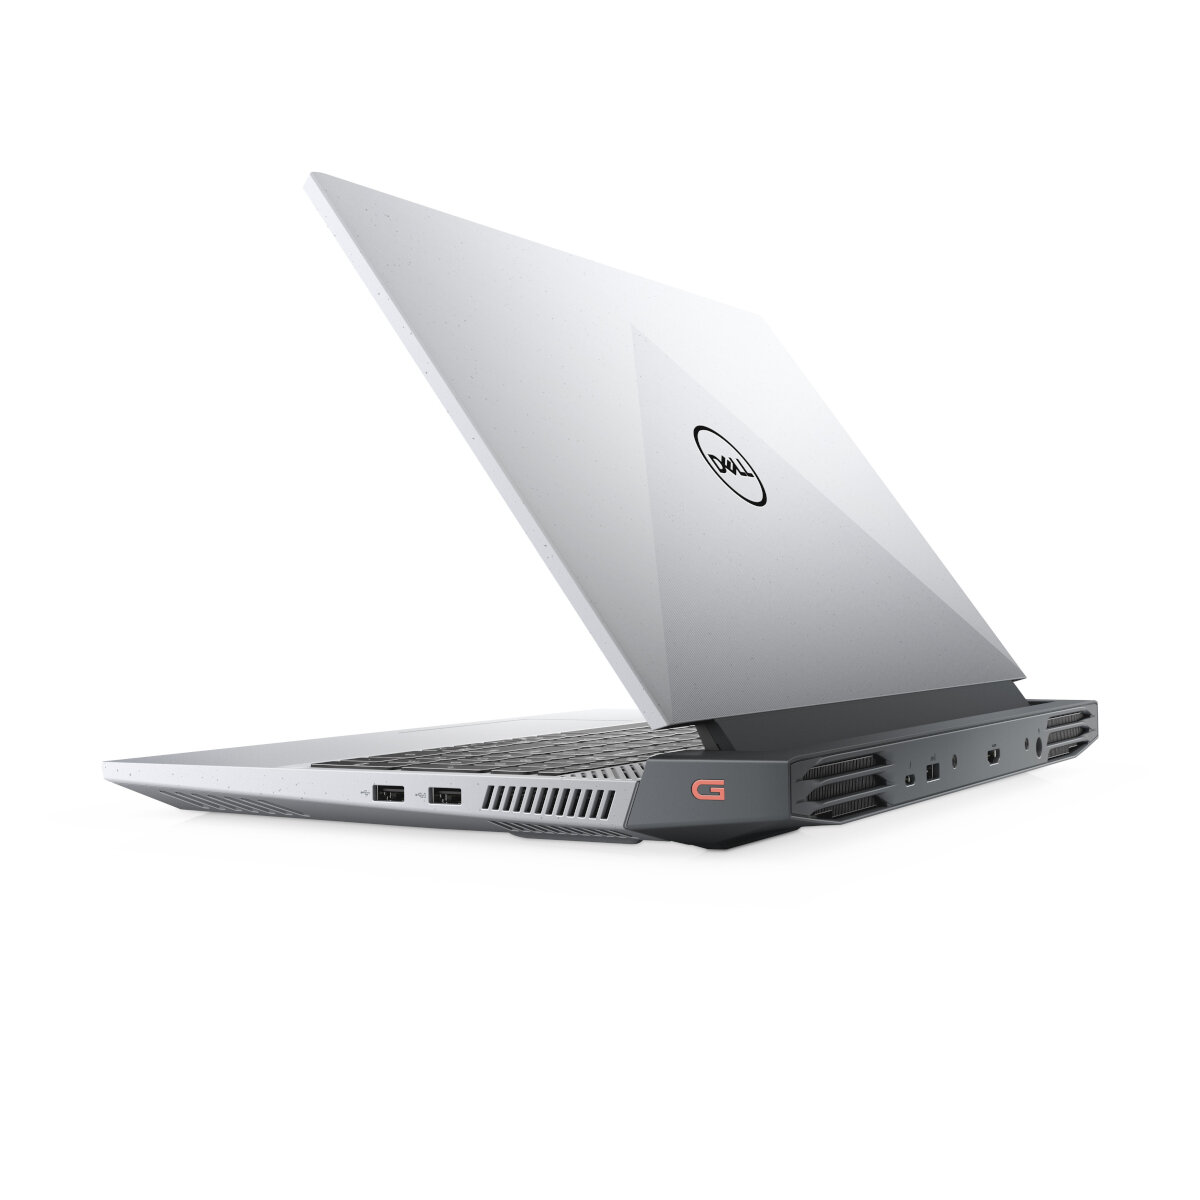 Laptop DELL Inspiron G5 5515 pod kątem z prawej strony